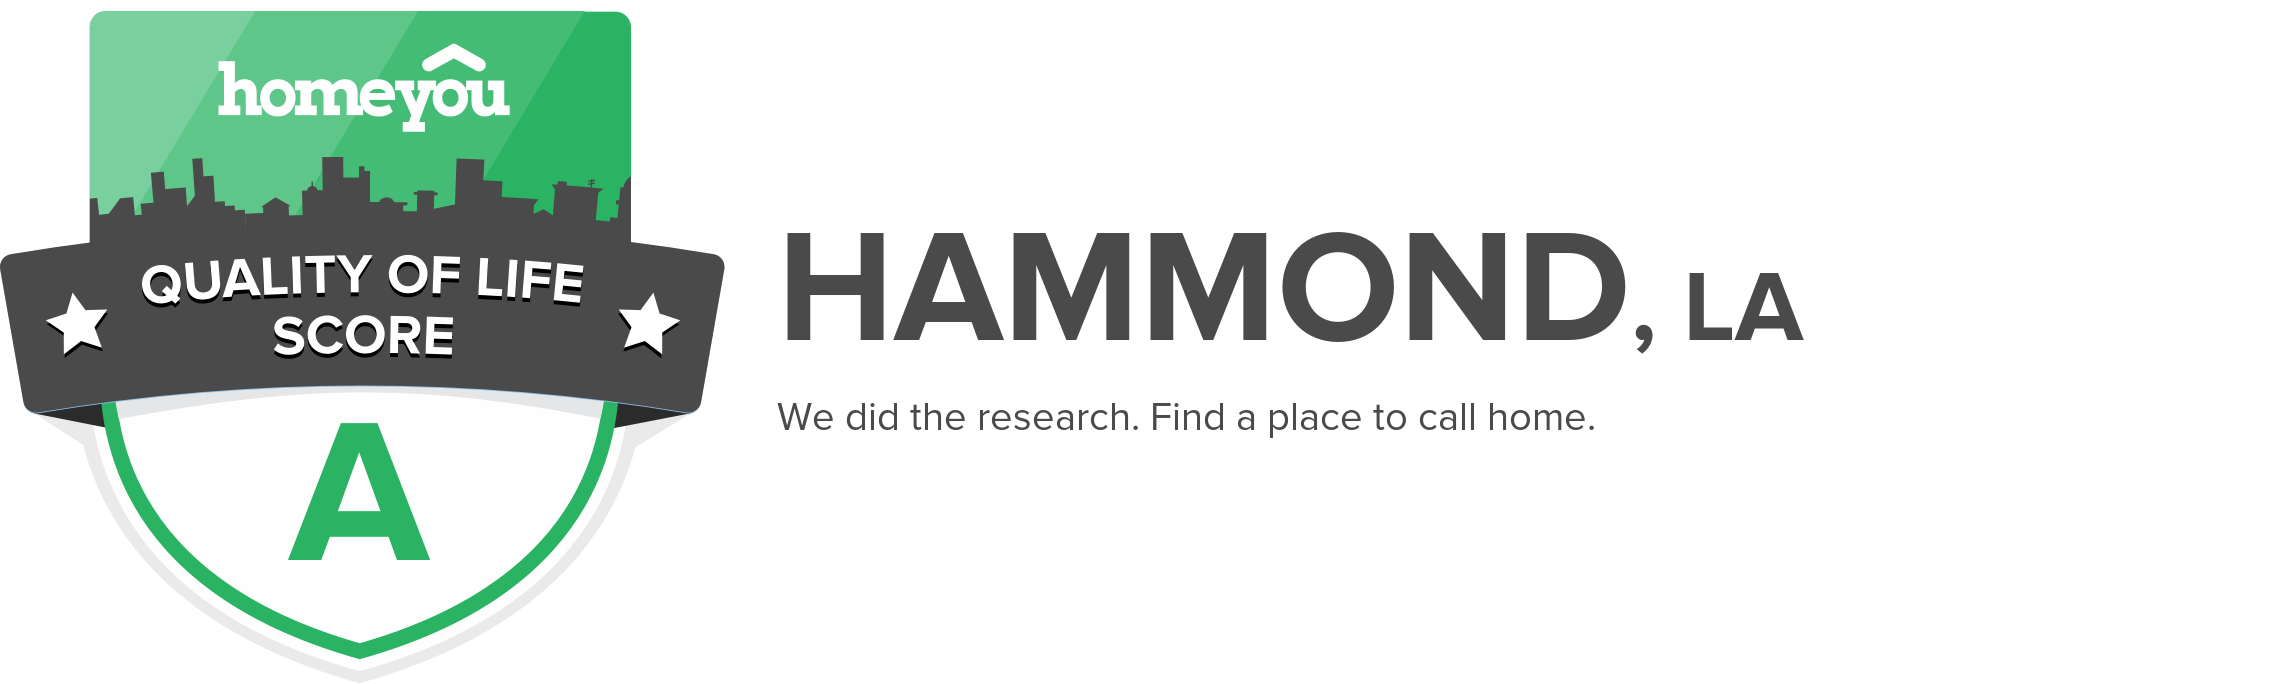 Hammond, LA